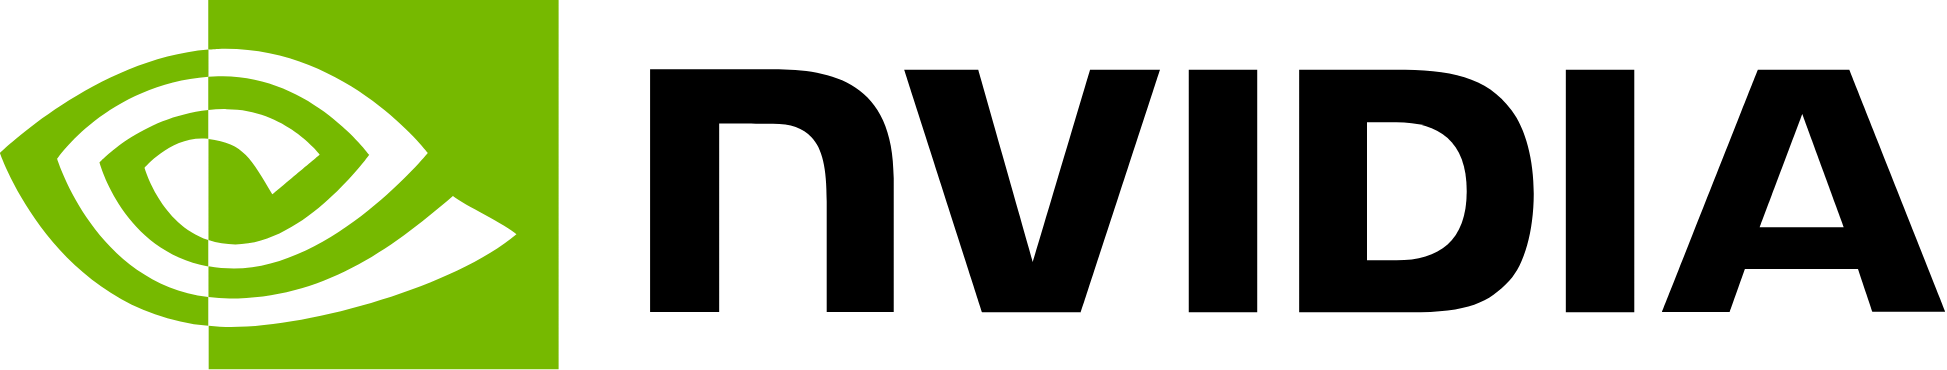 NVIDIA logo large (transparent PNG)